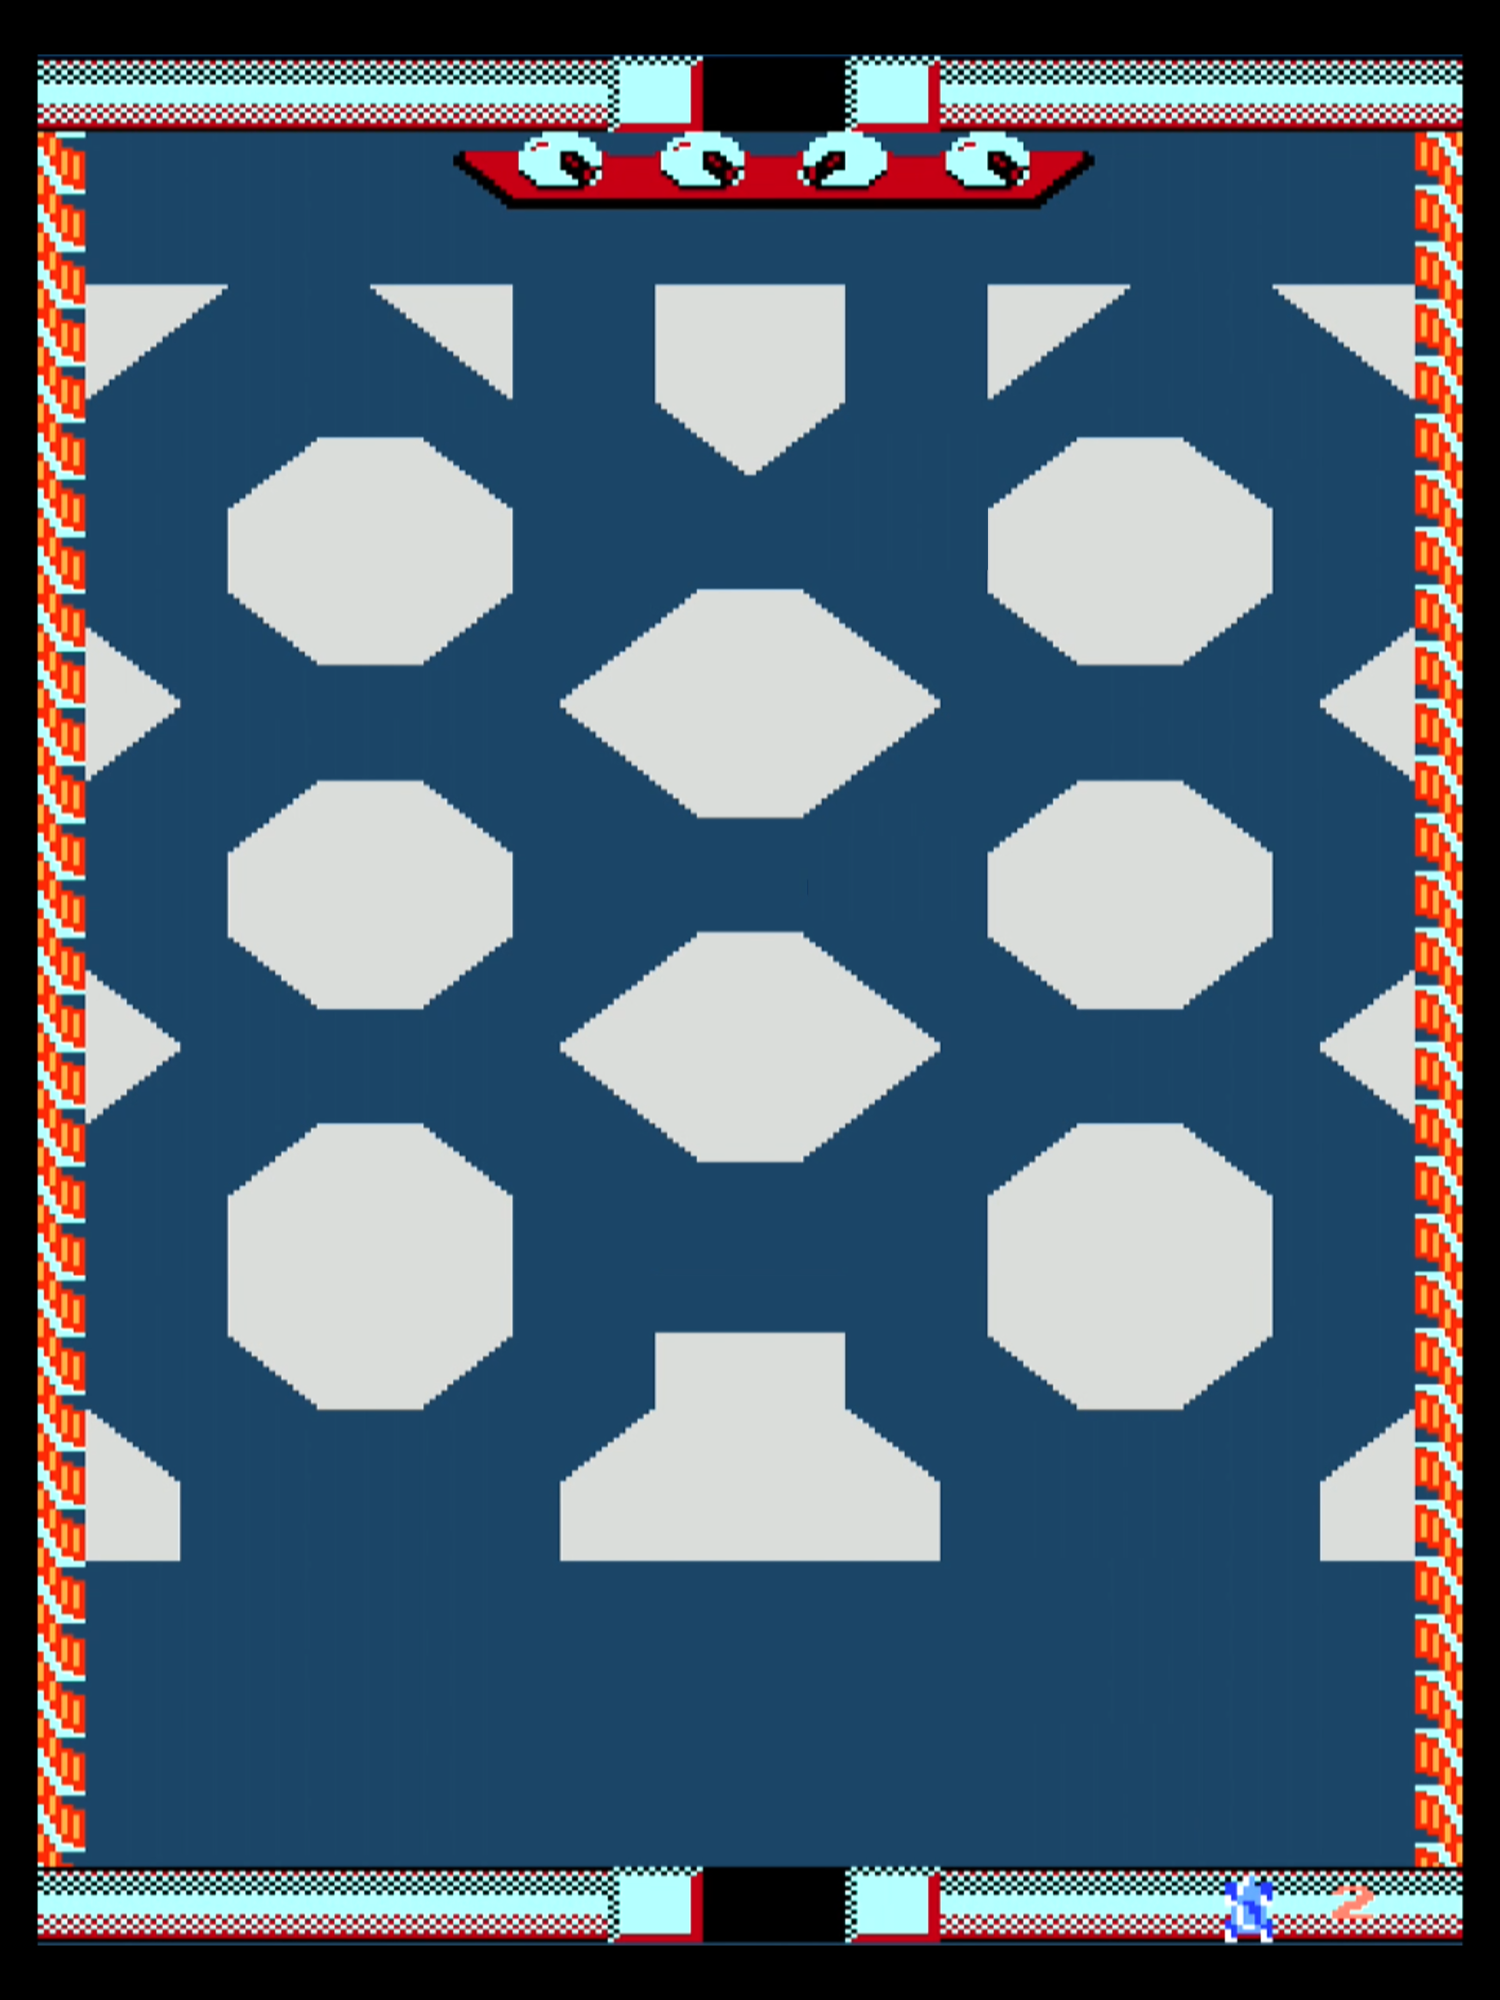 Pattern 6